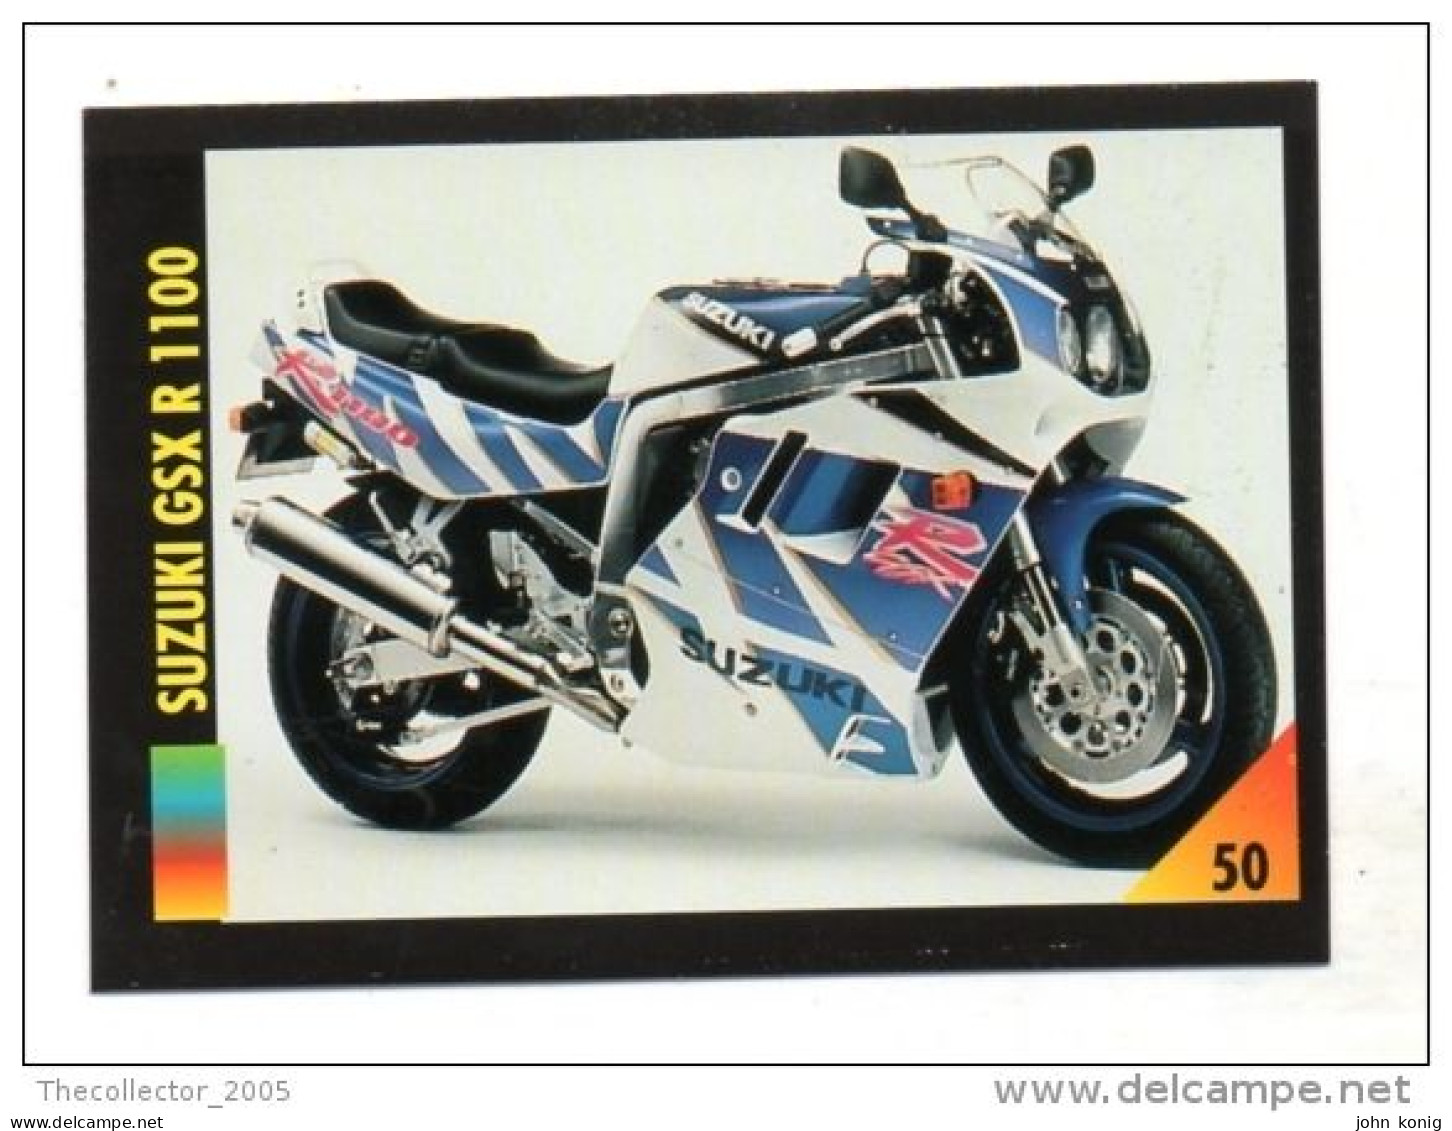 FIGURINA TRADING CARDS - LA MIA MOTO - MY MOTORBIKE - MASTERS EDIZIONI (1993) - SUZUKI GSX R 1100 - Moteurs